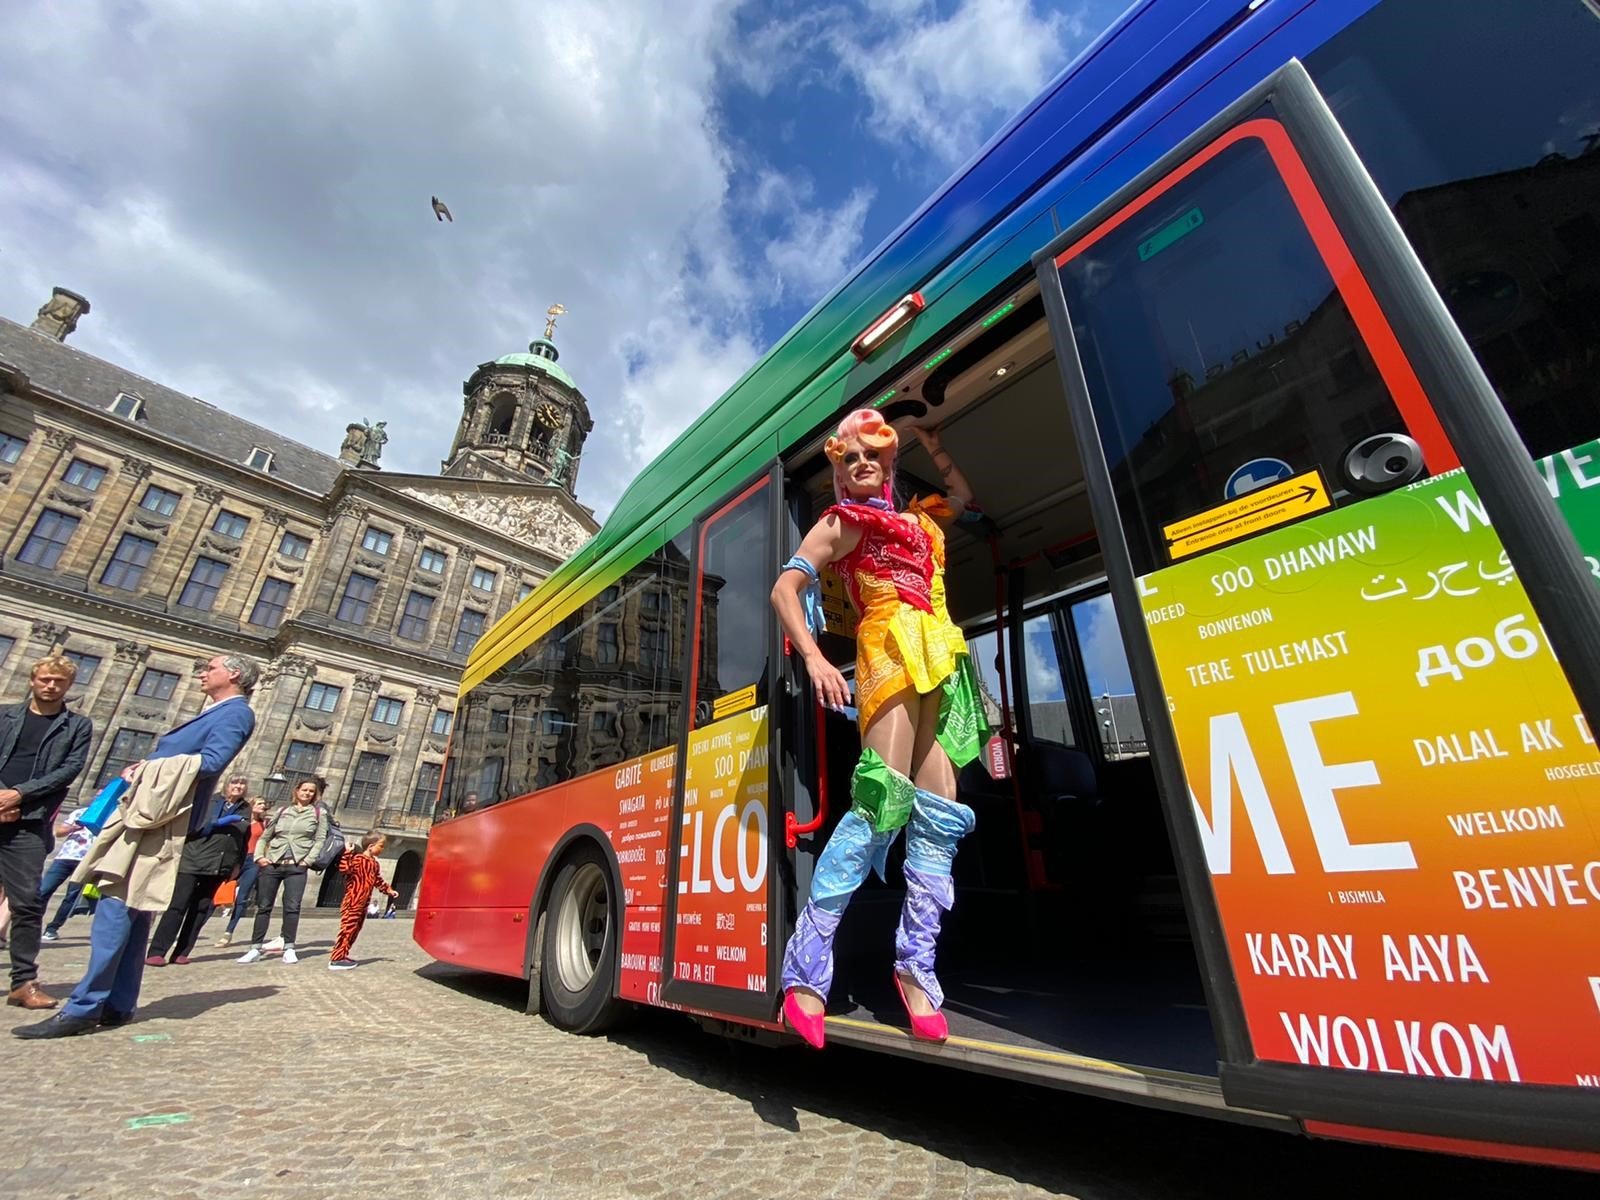 Vijf dodelijk krokodil Connexxion introduces rainbow buses in the Amsterdam region - Transdev, the  mobility company